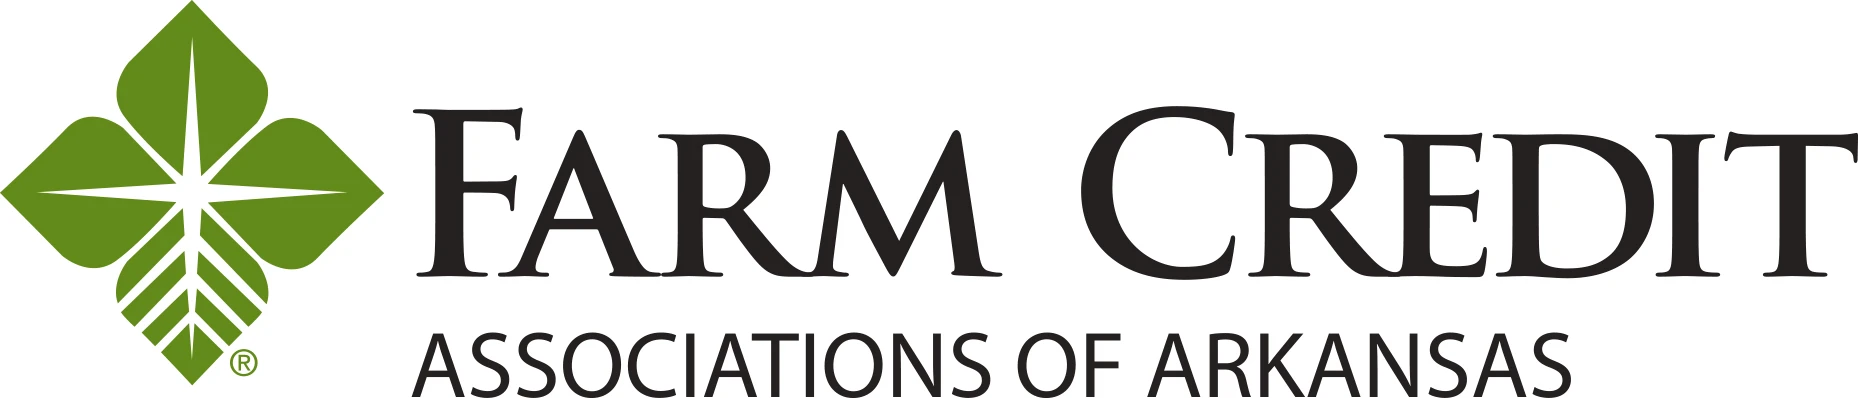 Farm Credit Associations of Arkansas